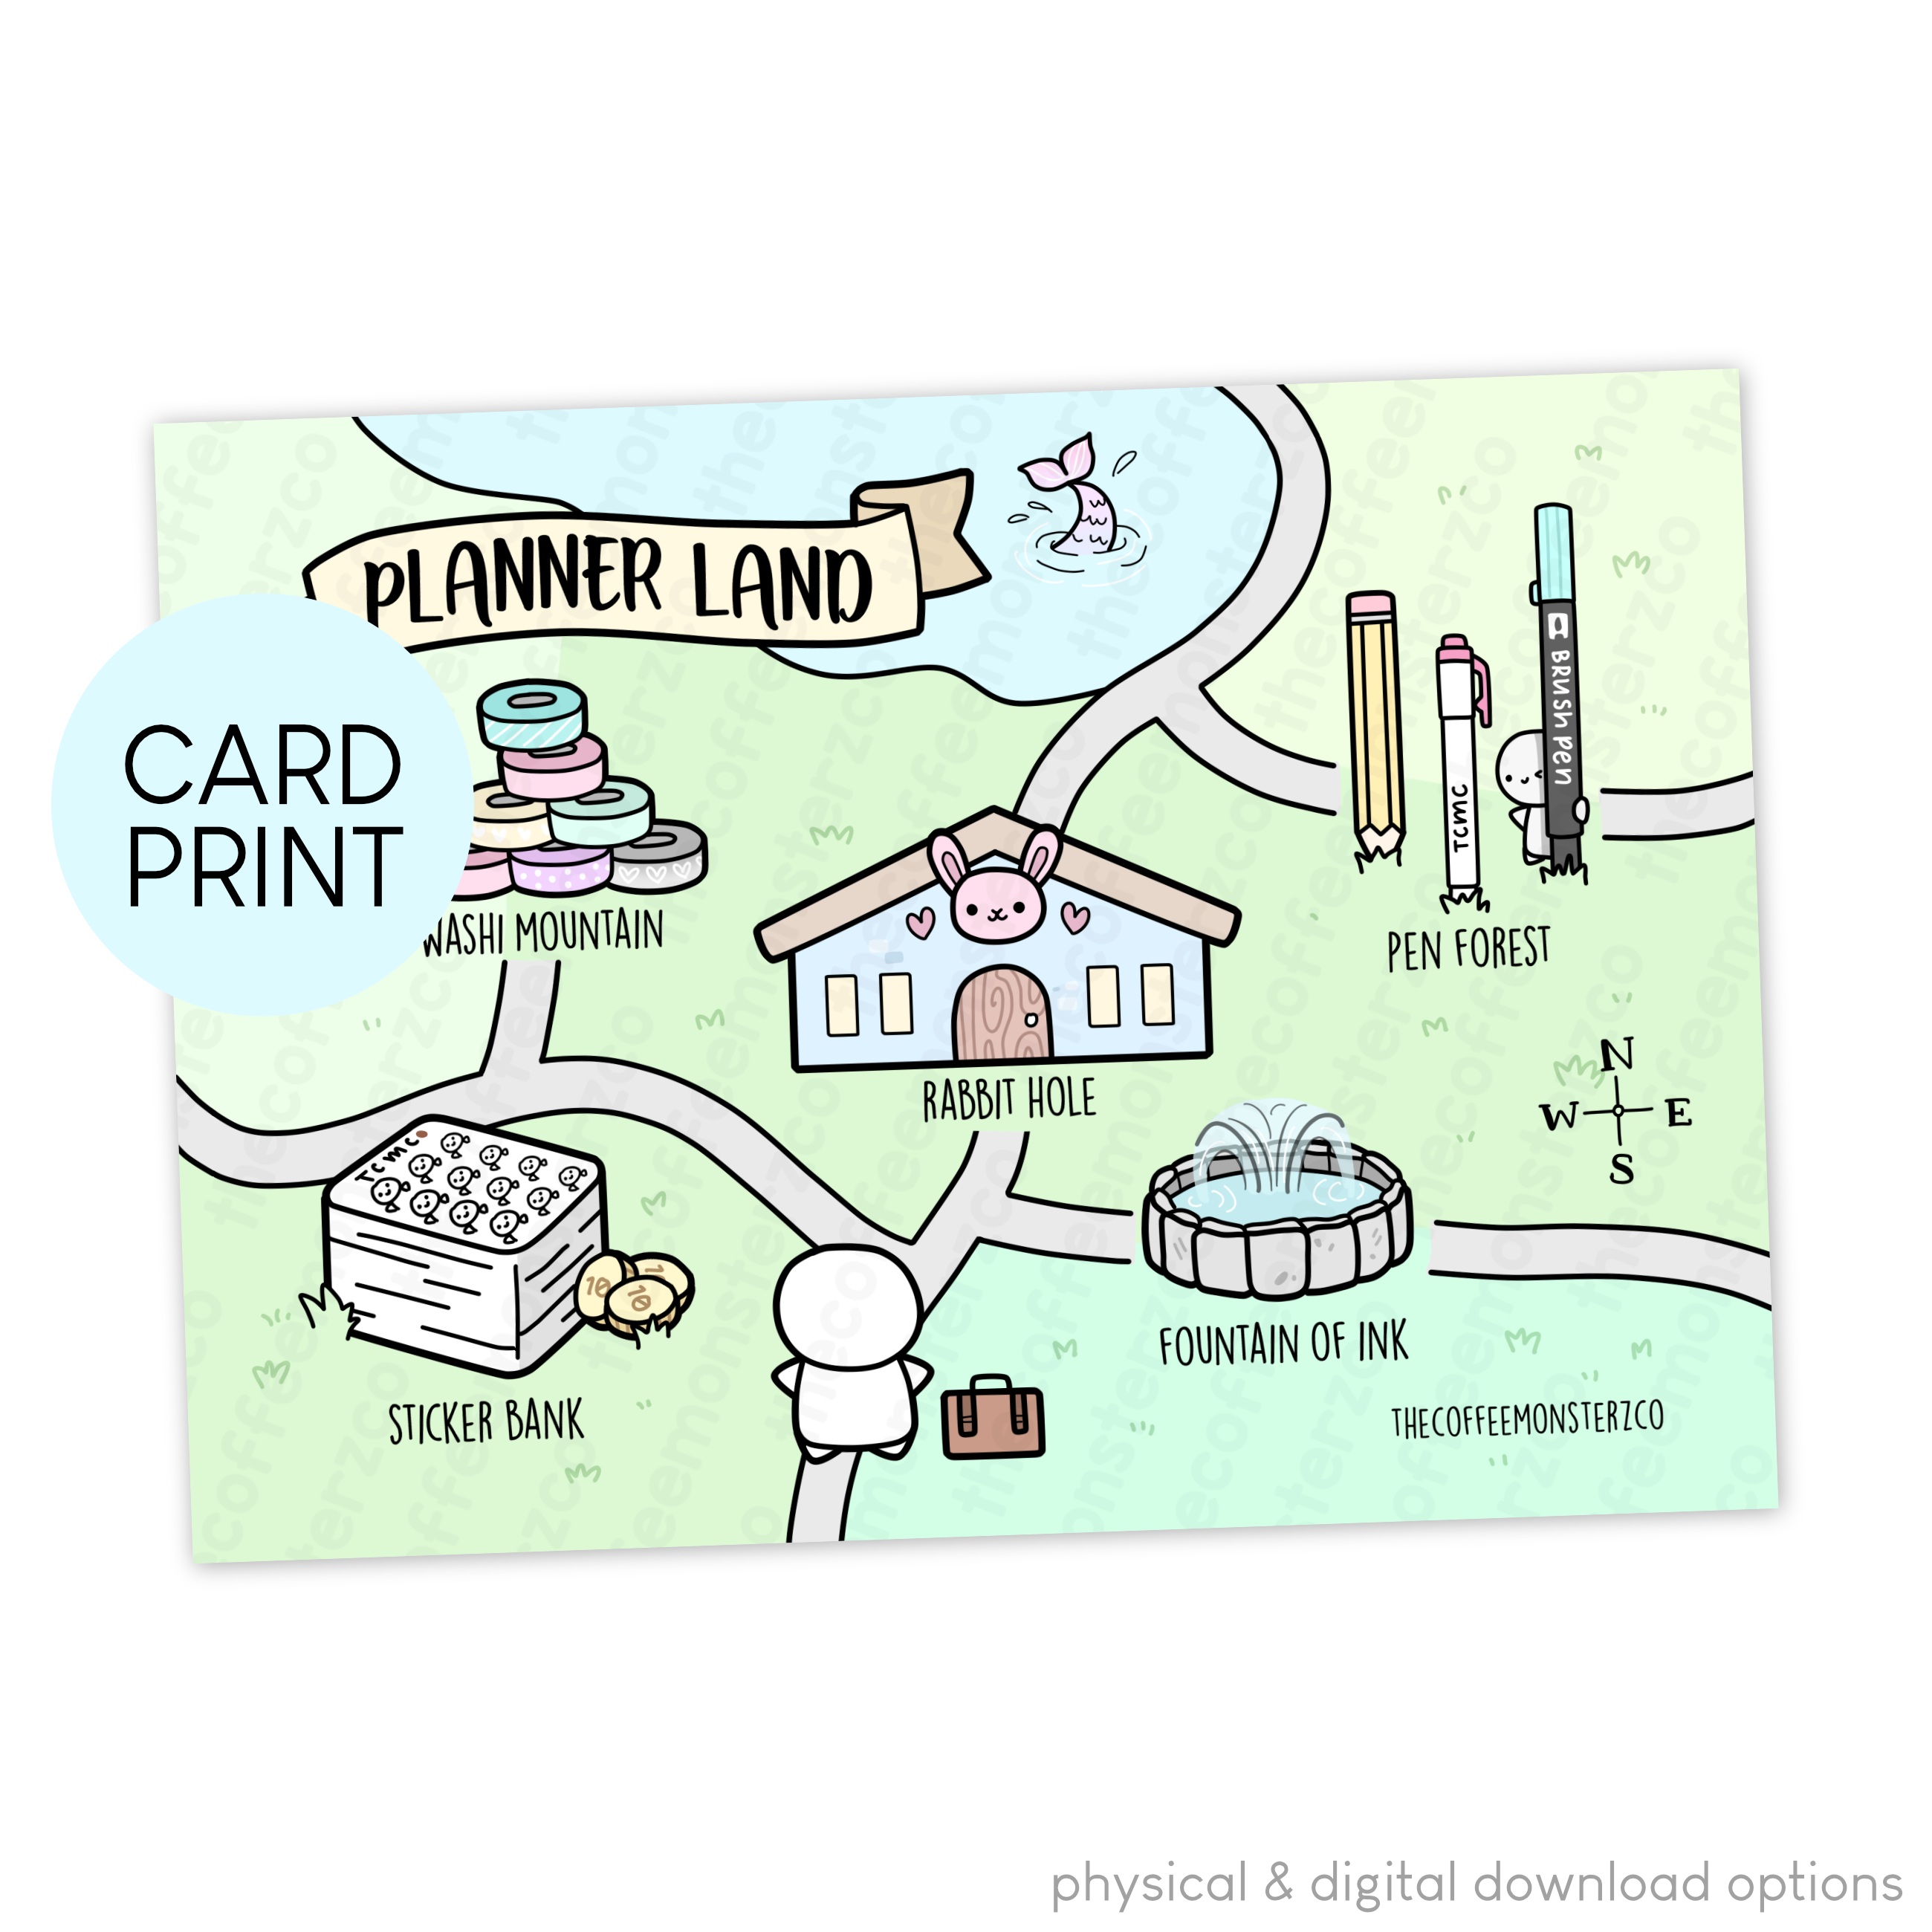 Planner Land - Card Print